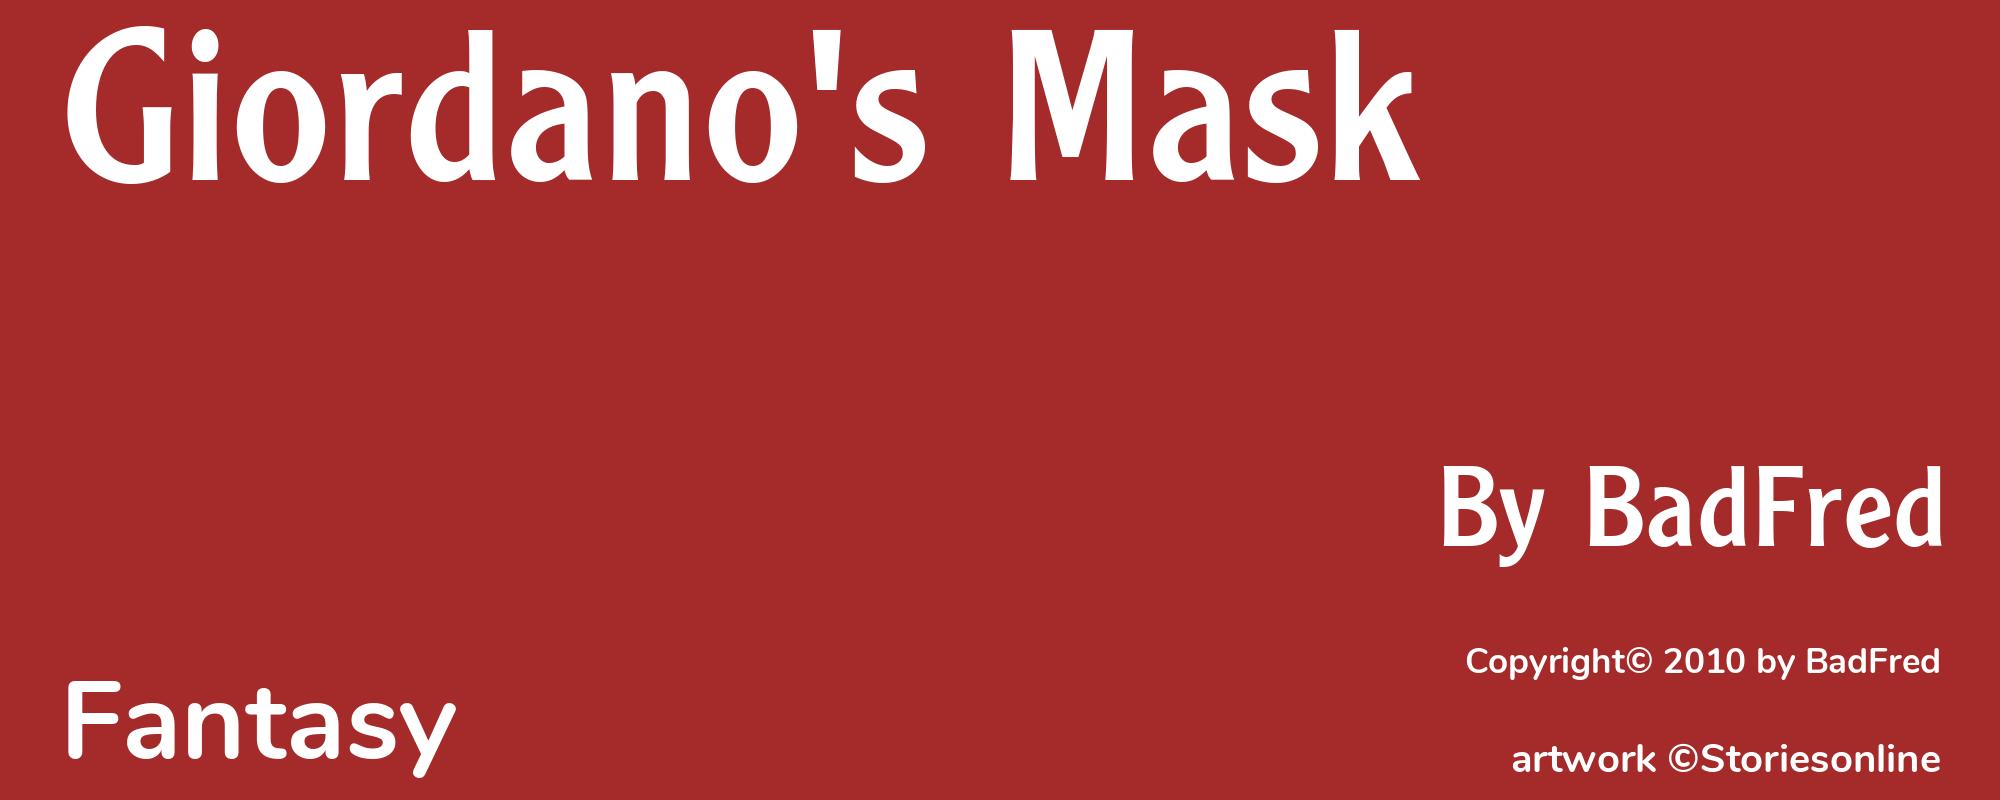 Giordano's Mask - Cover